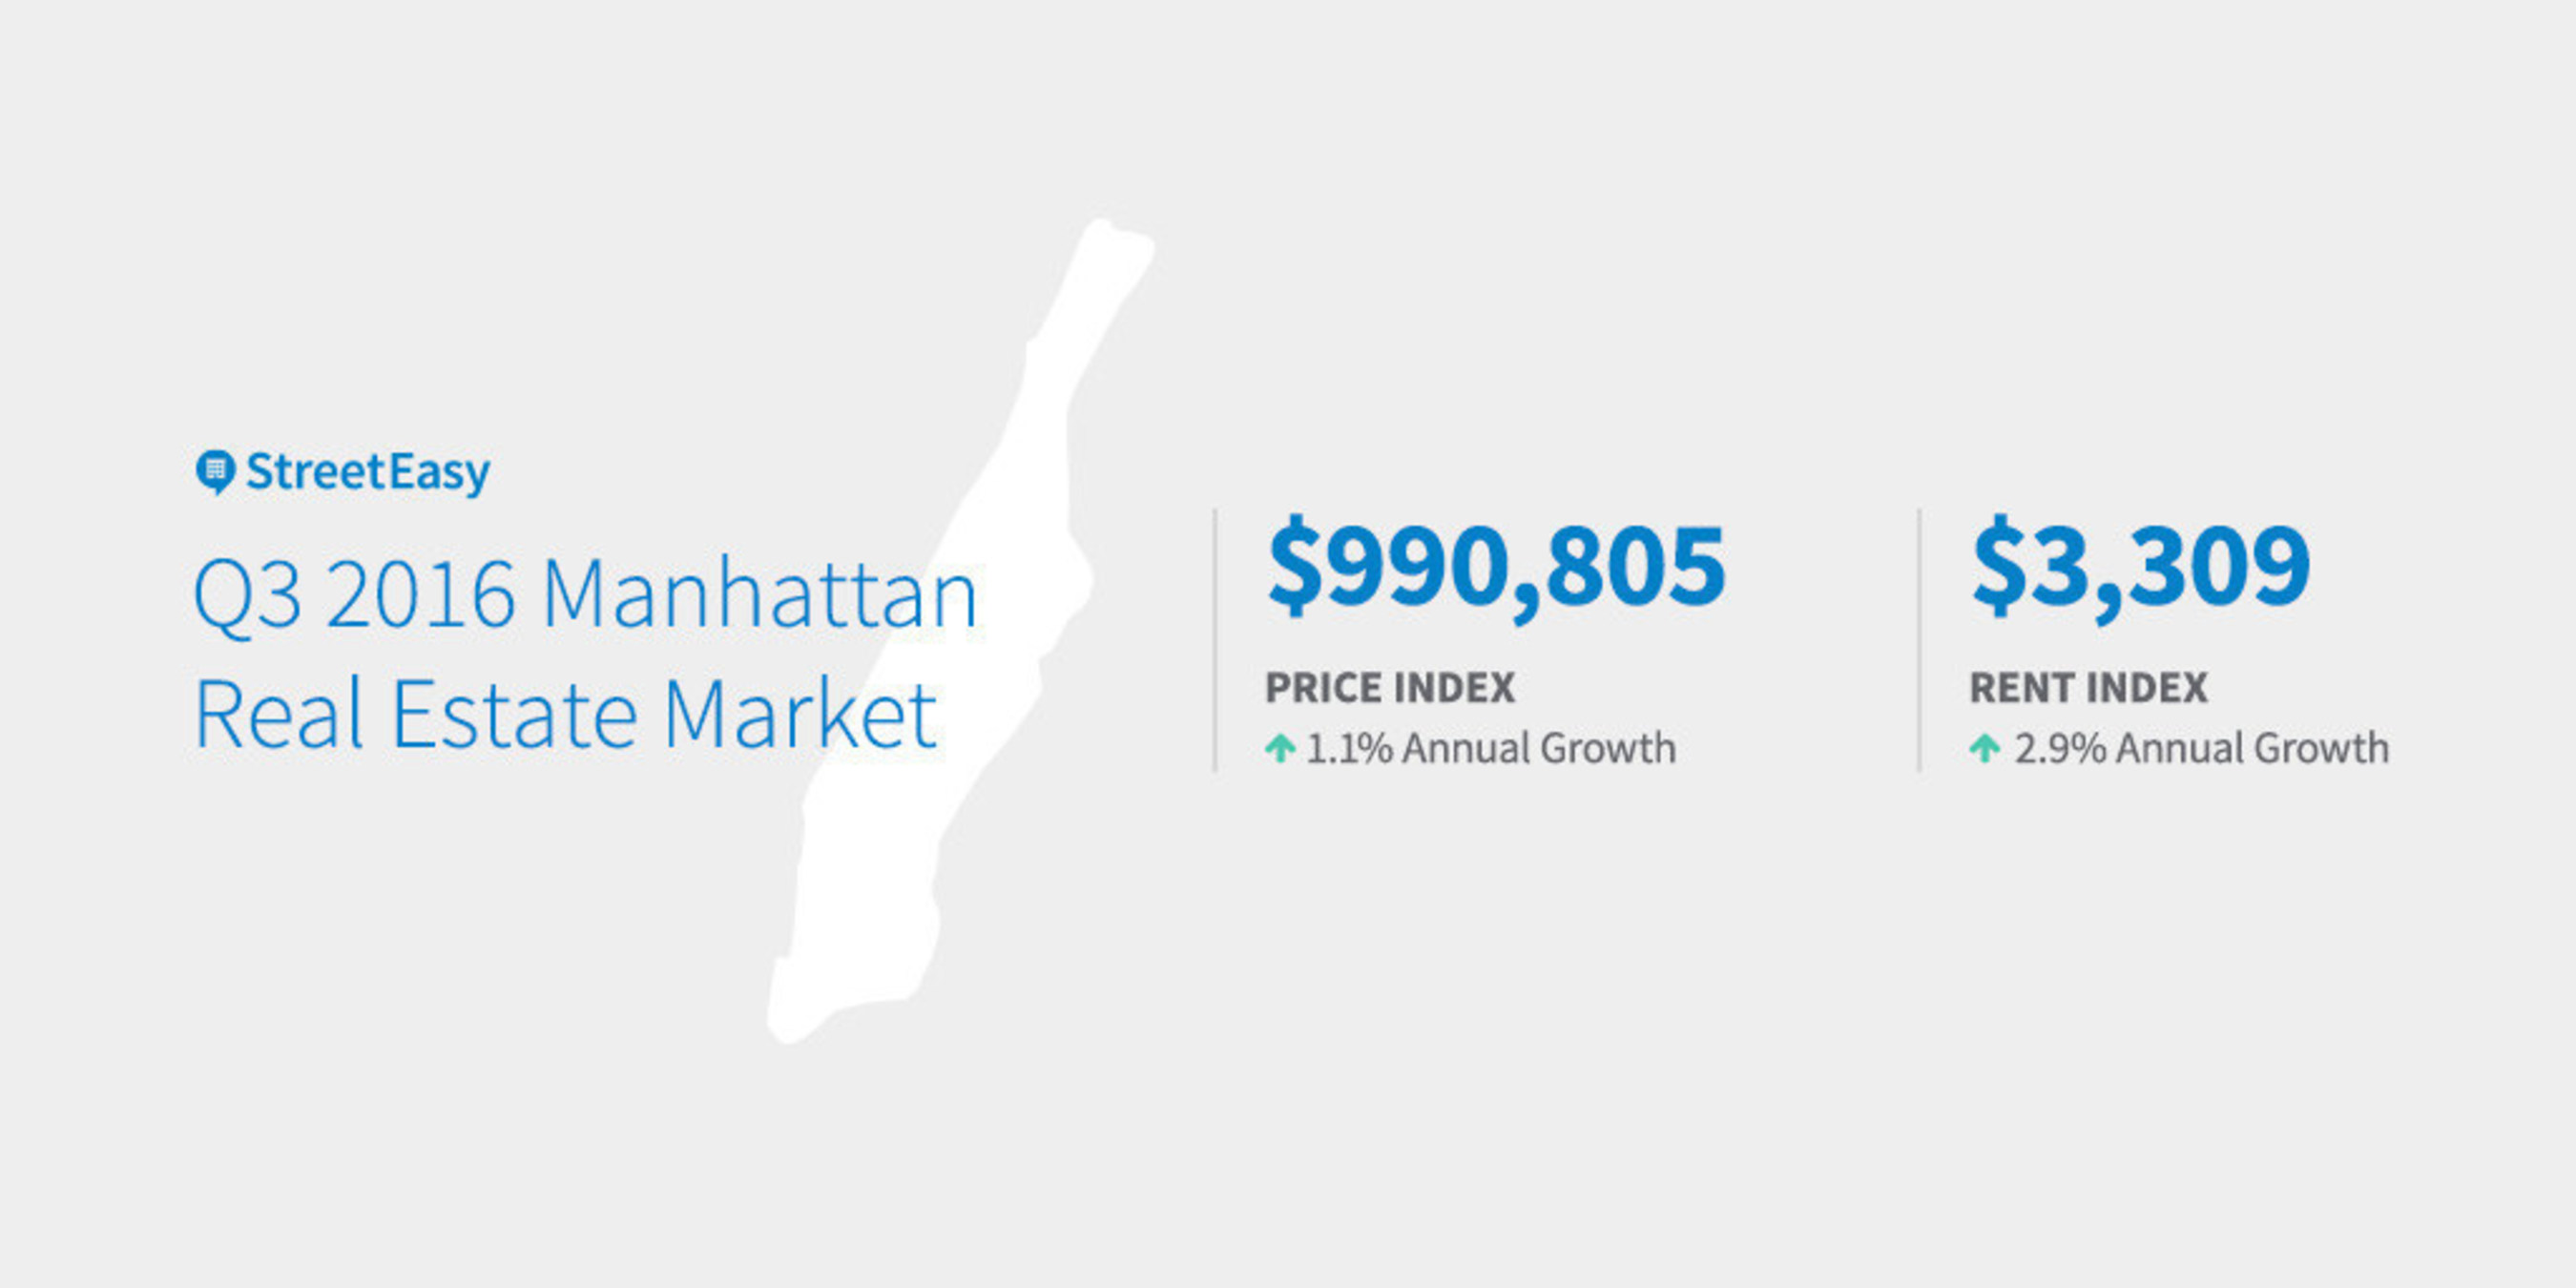 Q3 2016 Manhattan Real Estate Market